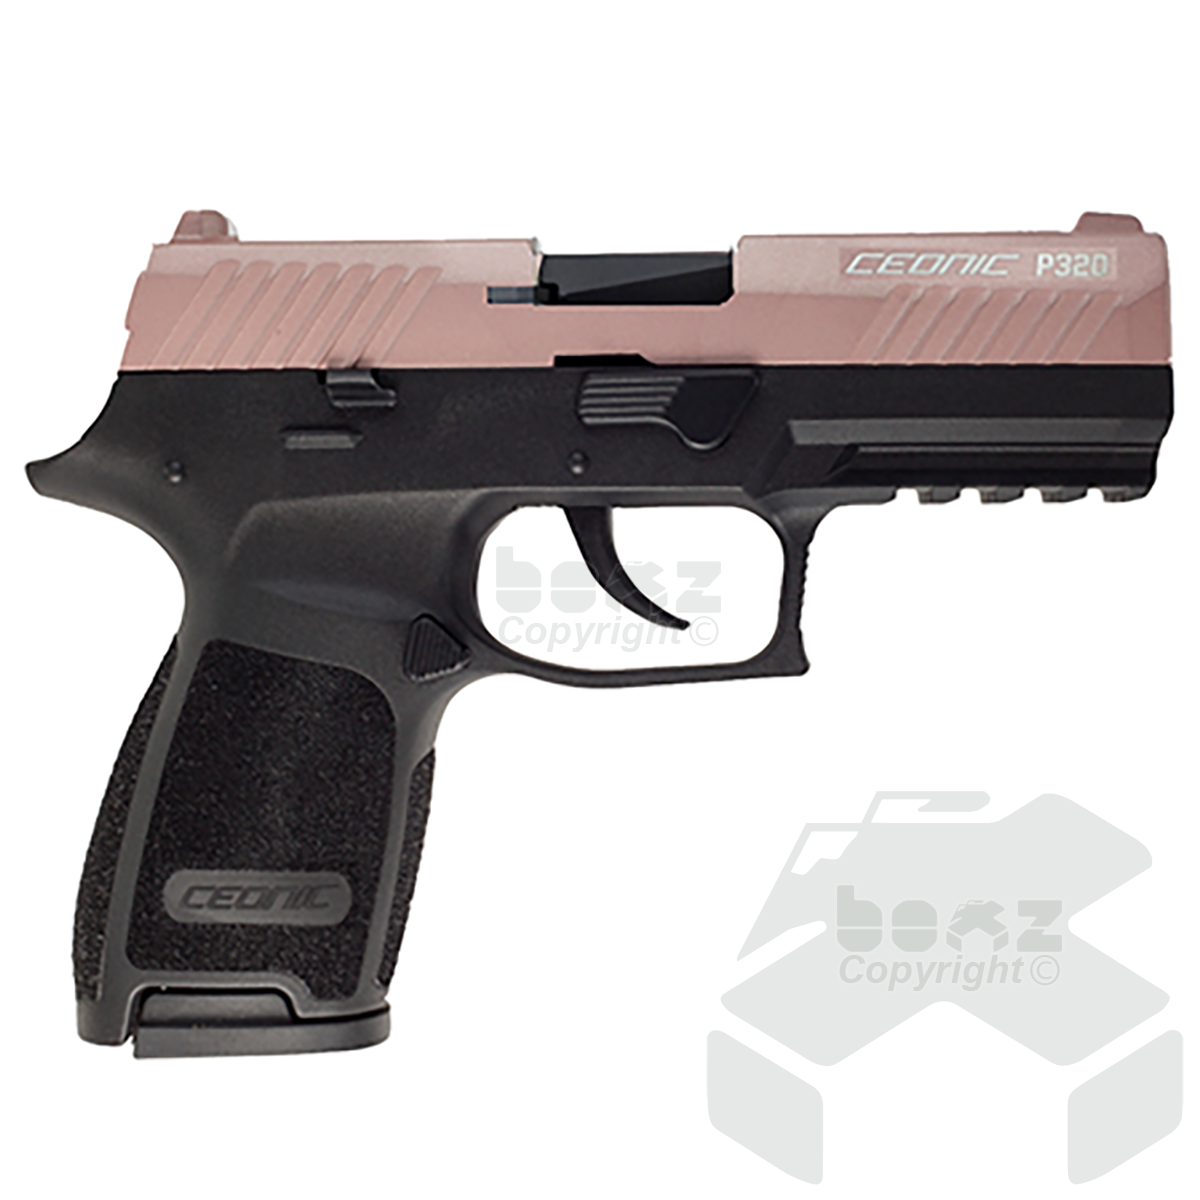 Ceonic P320 Blank Firing Pistol - 9mm - Pink Black